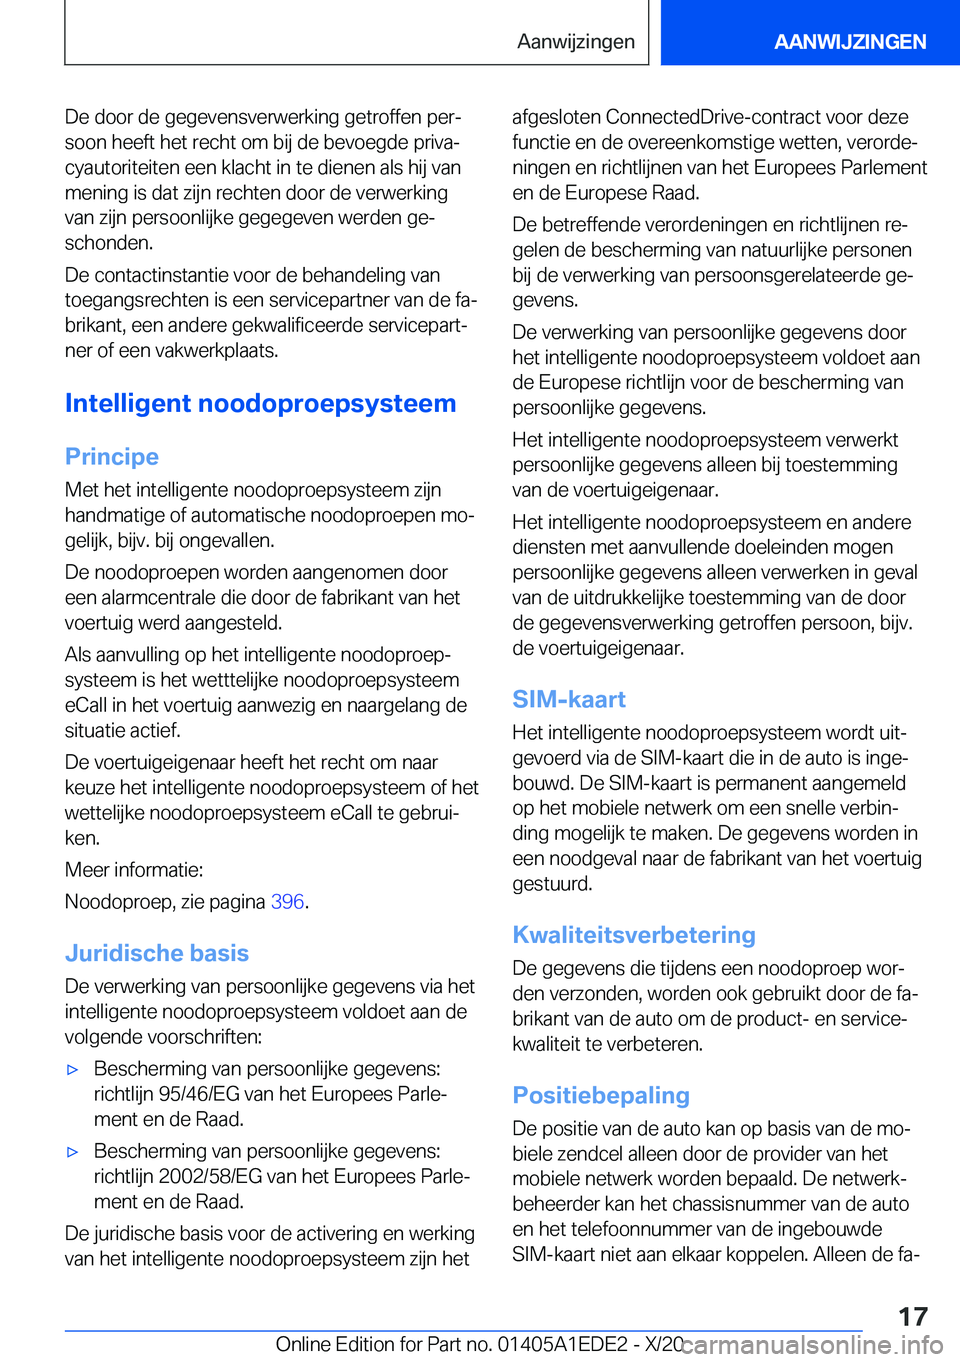 BMW 8 SERIES CONVERTIBLE 2021  Instructieboekjes (in Dutch) �D�e��d�o�o�r��d�e��g�e�g�e�v�e�n�s�v�e�r�w�e�r�k�i�n�g��g�e�t�r�o�f�f�e�n��p�e�rj
�s�o�o�n��h�e�e�f�t��h�e�t��r�e�c�h�t��o�m��b�i�j��d�e��b�e�v�o�e�g�d�e��p�r�i�v�aj �c�y�a�u�t�o�r�i�t